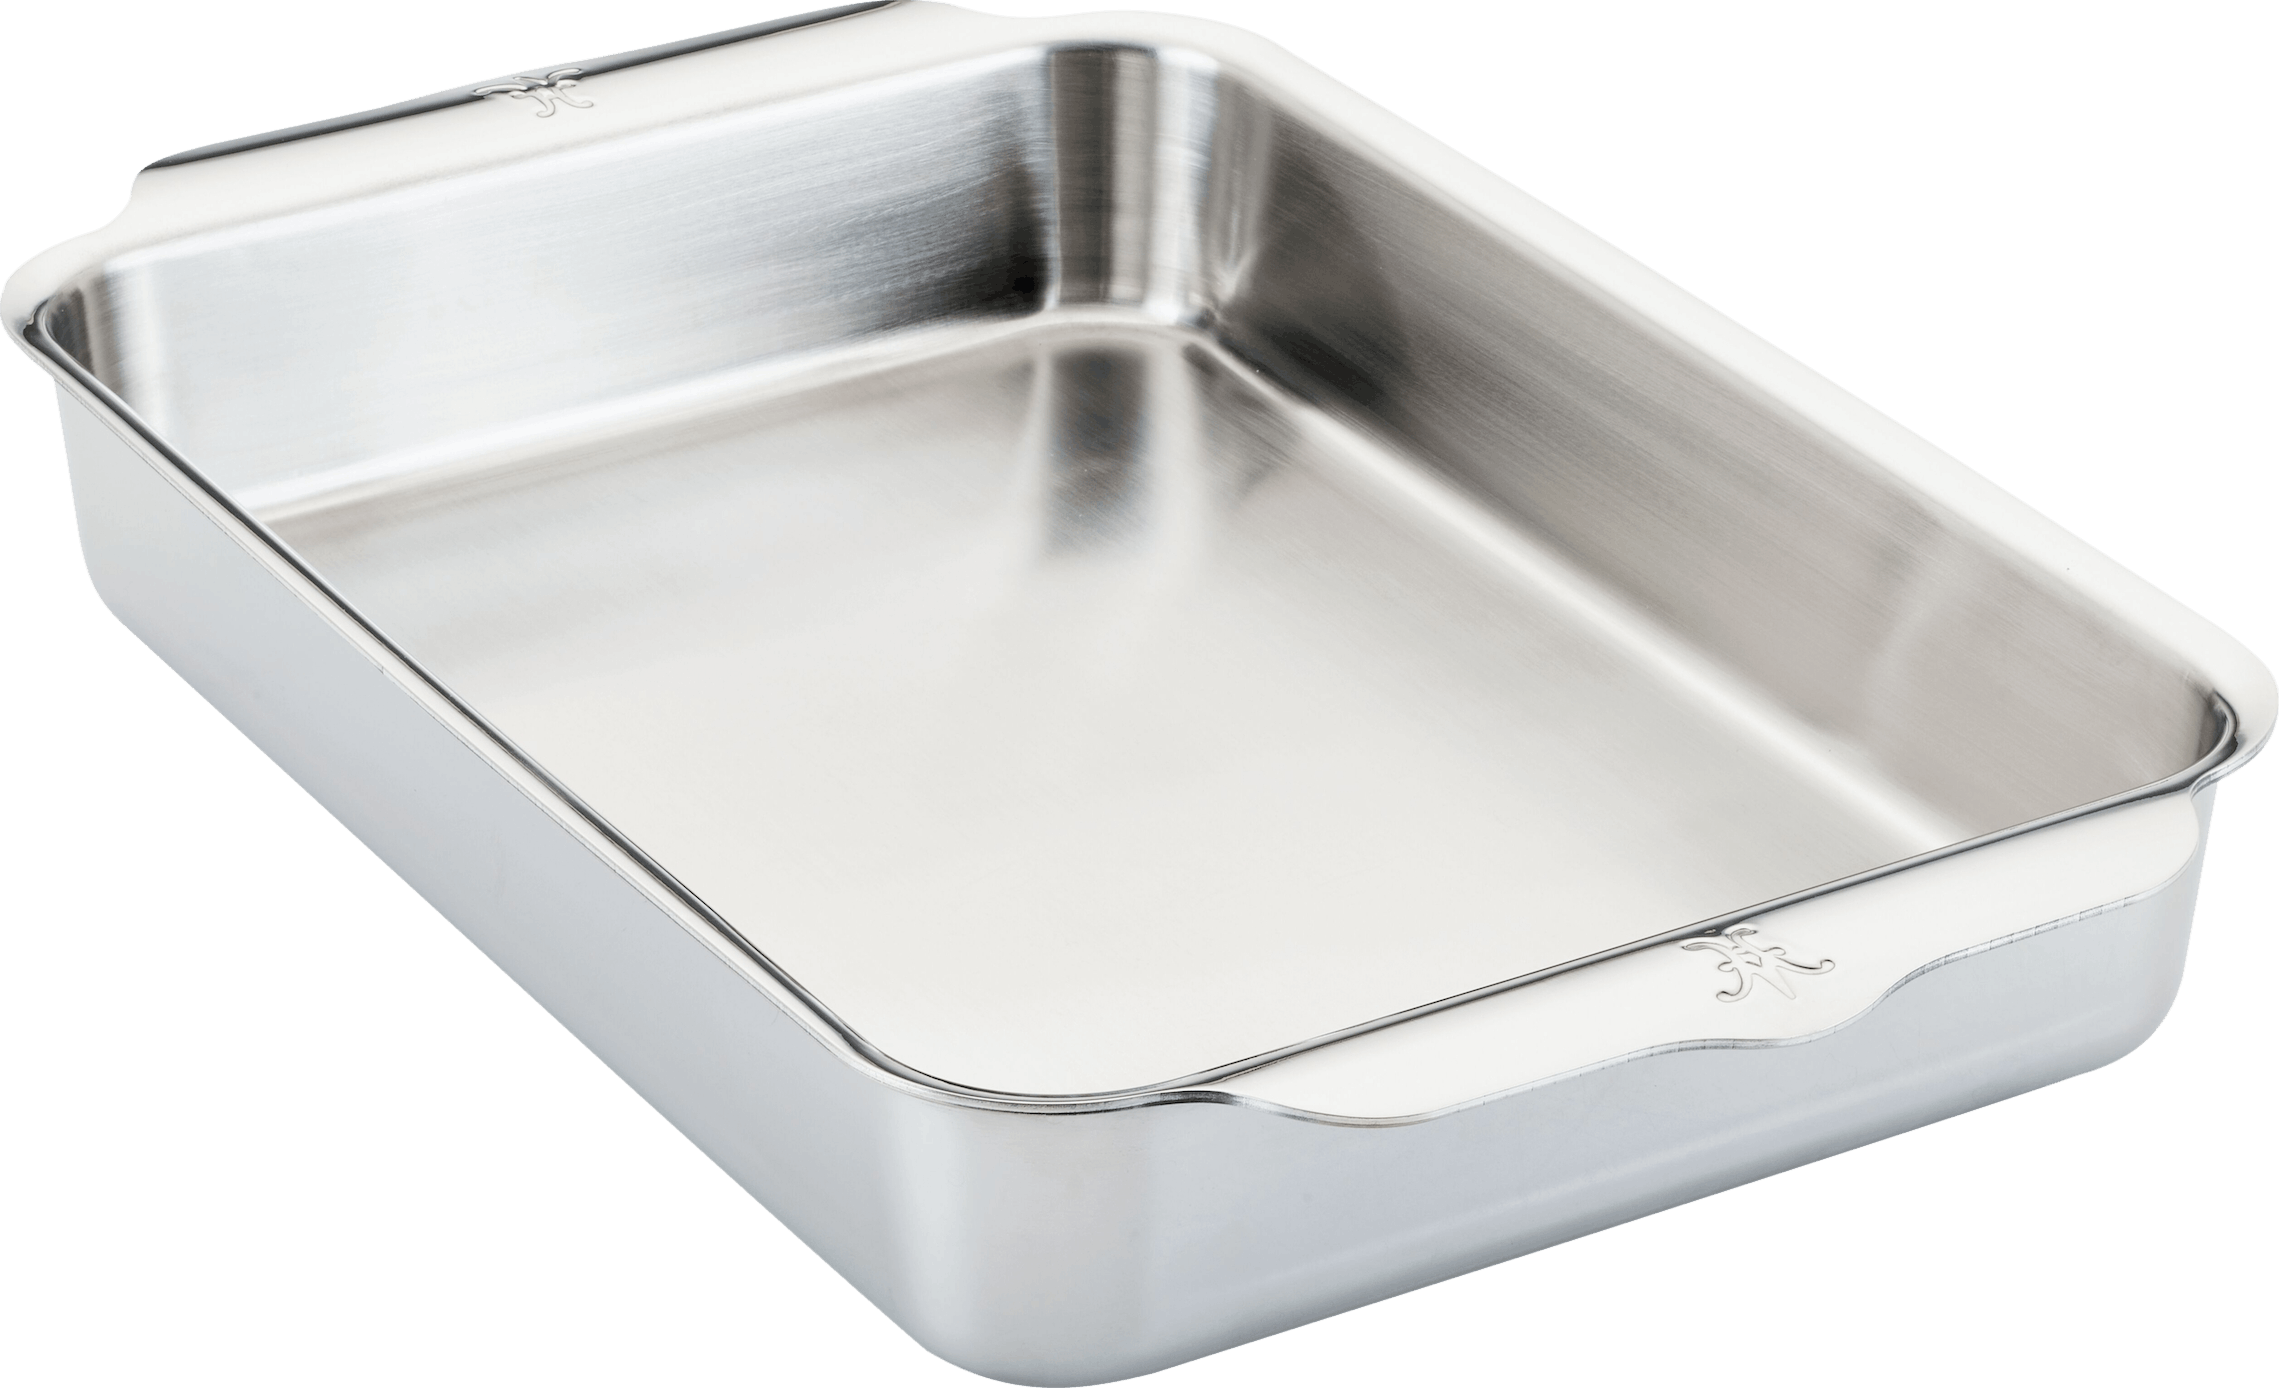 OvenBond Tri-ply Half Sheet Pan – Hestan Culinary